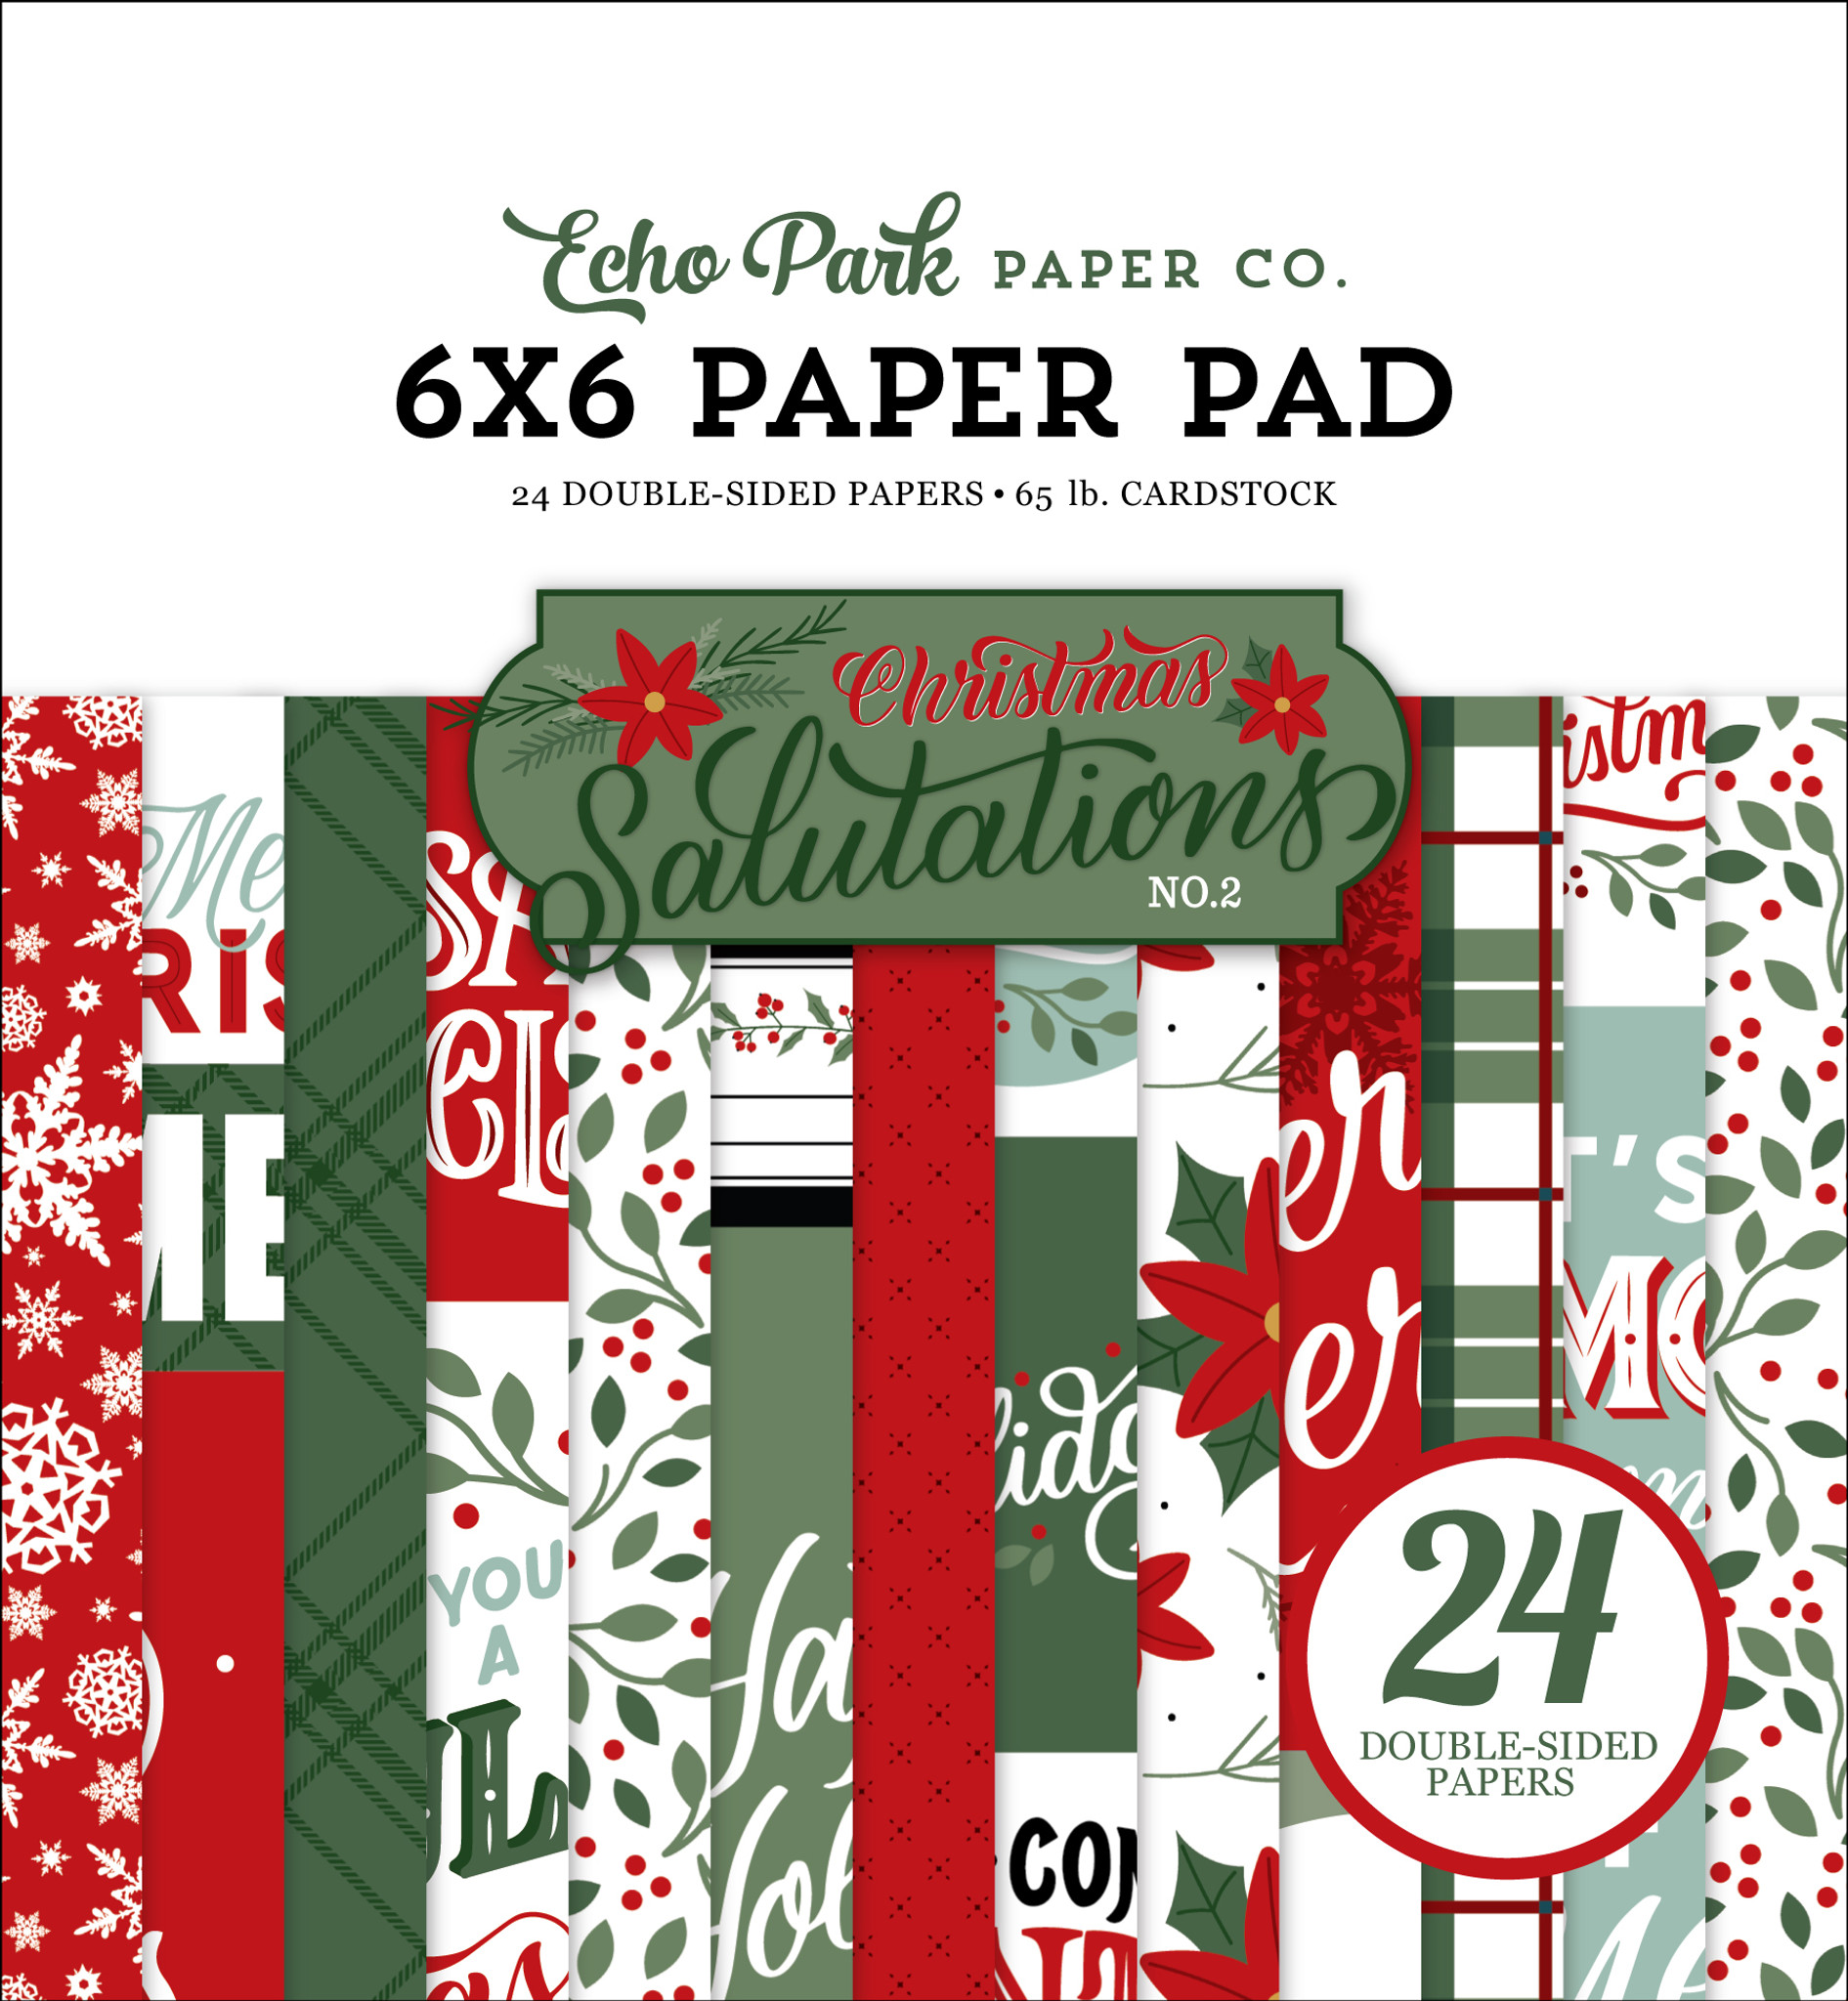 Christmas Salutations No. 2 6x6 Paper Pad - Echo Park Paper Co.